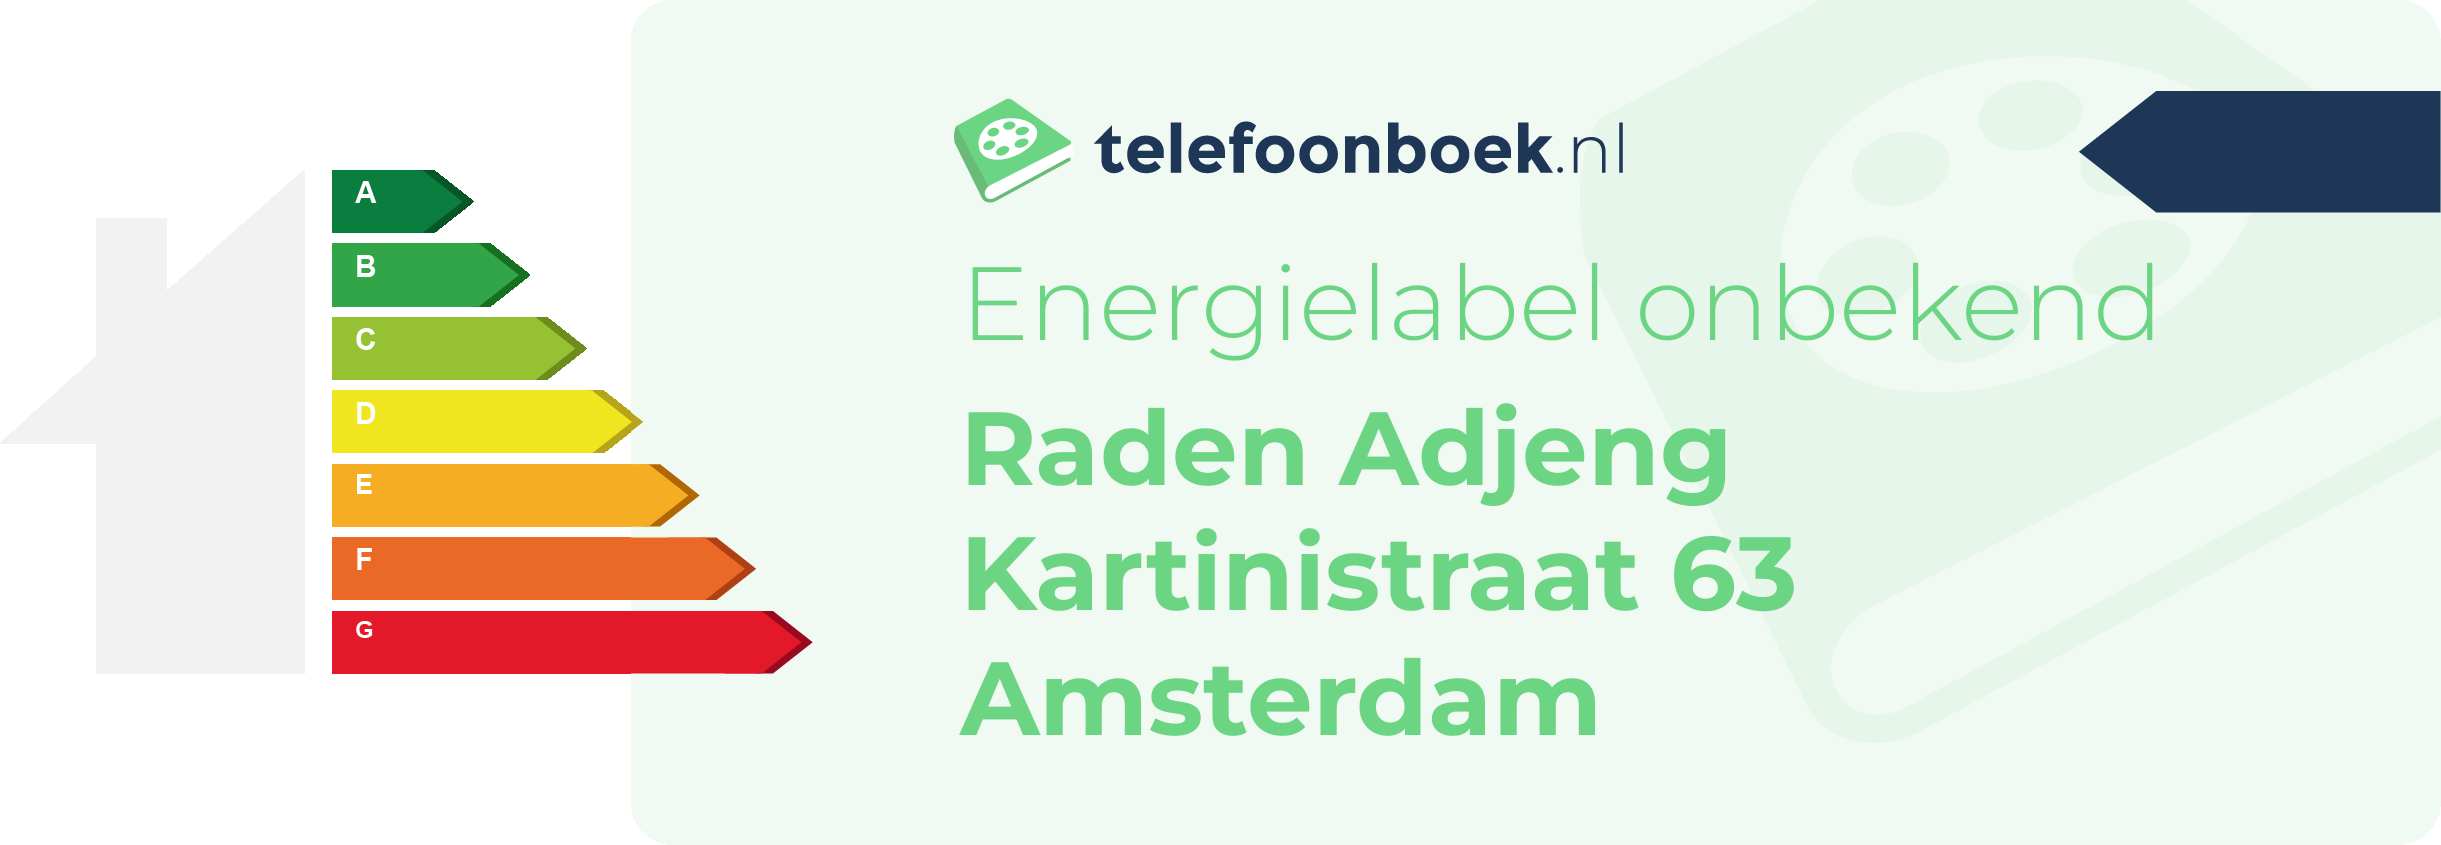 Energielabel Raden Adjeng Kartinistraat 63 Amsterdam